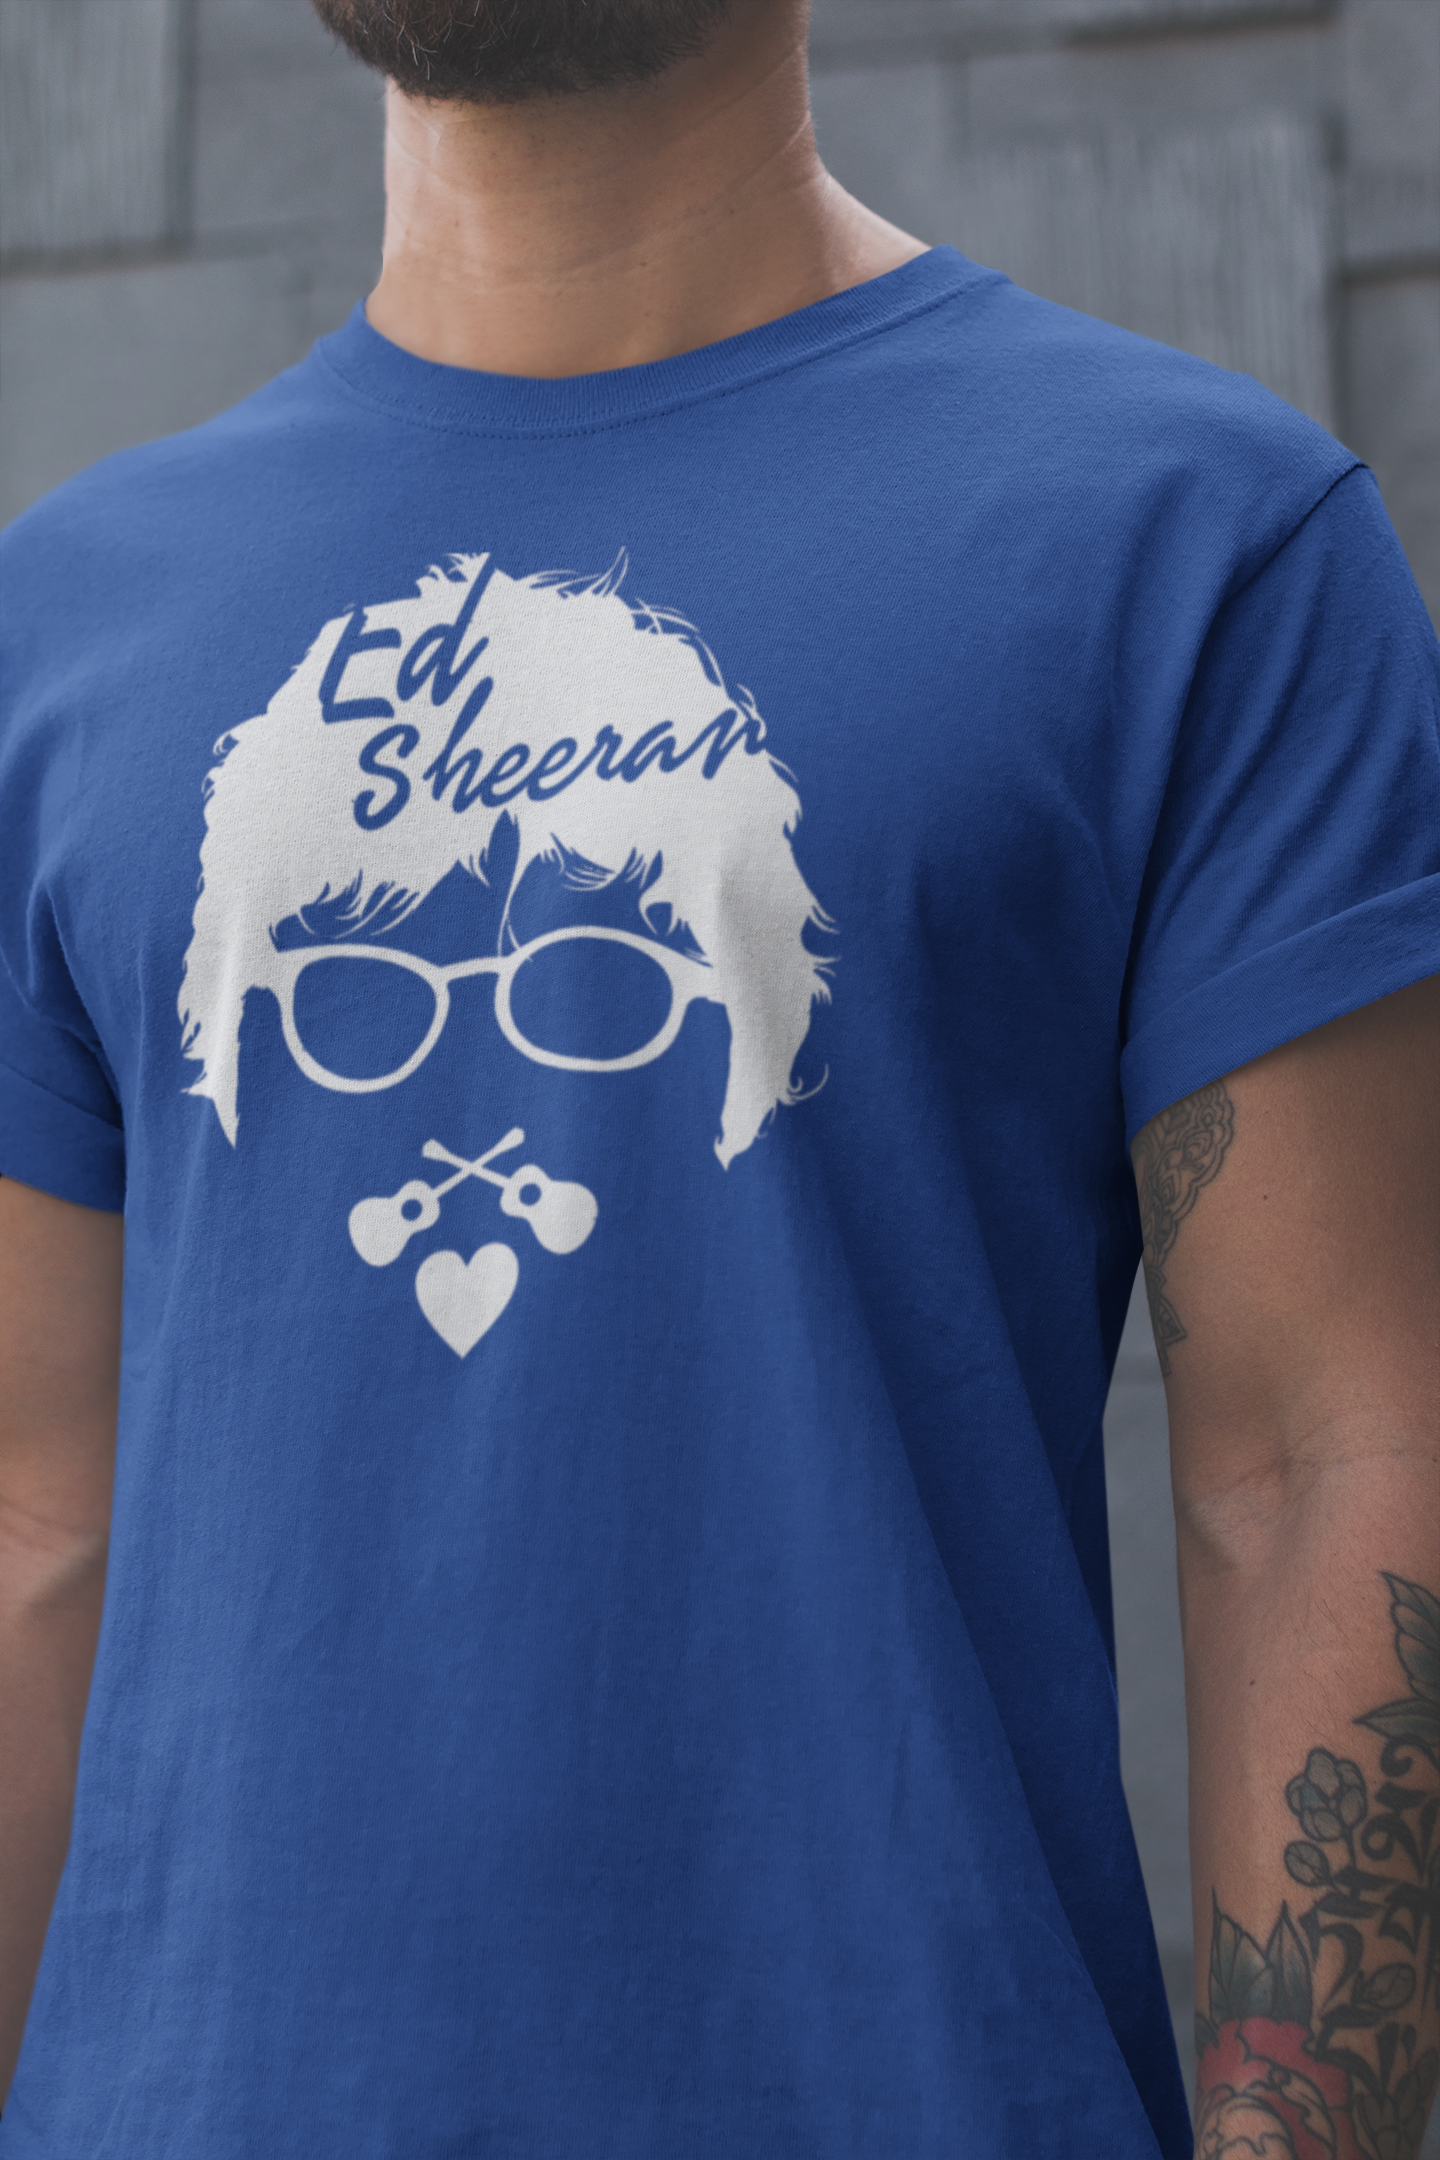 Camiseta "Ed Sheeran" Clássica - Música